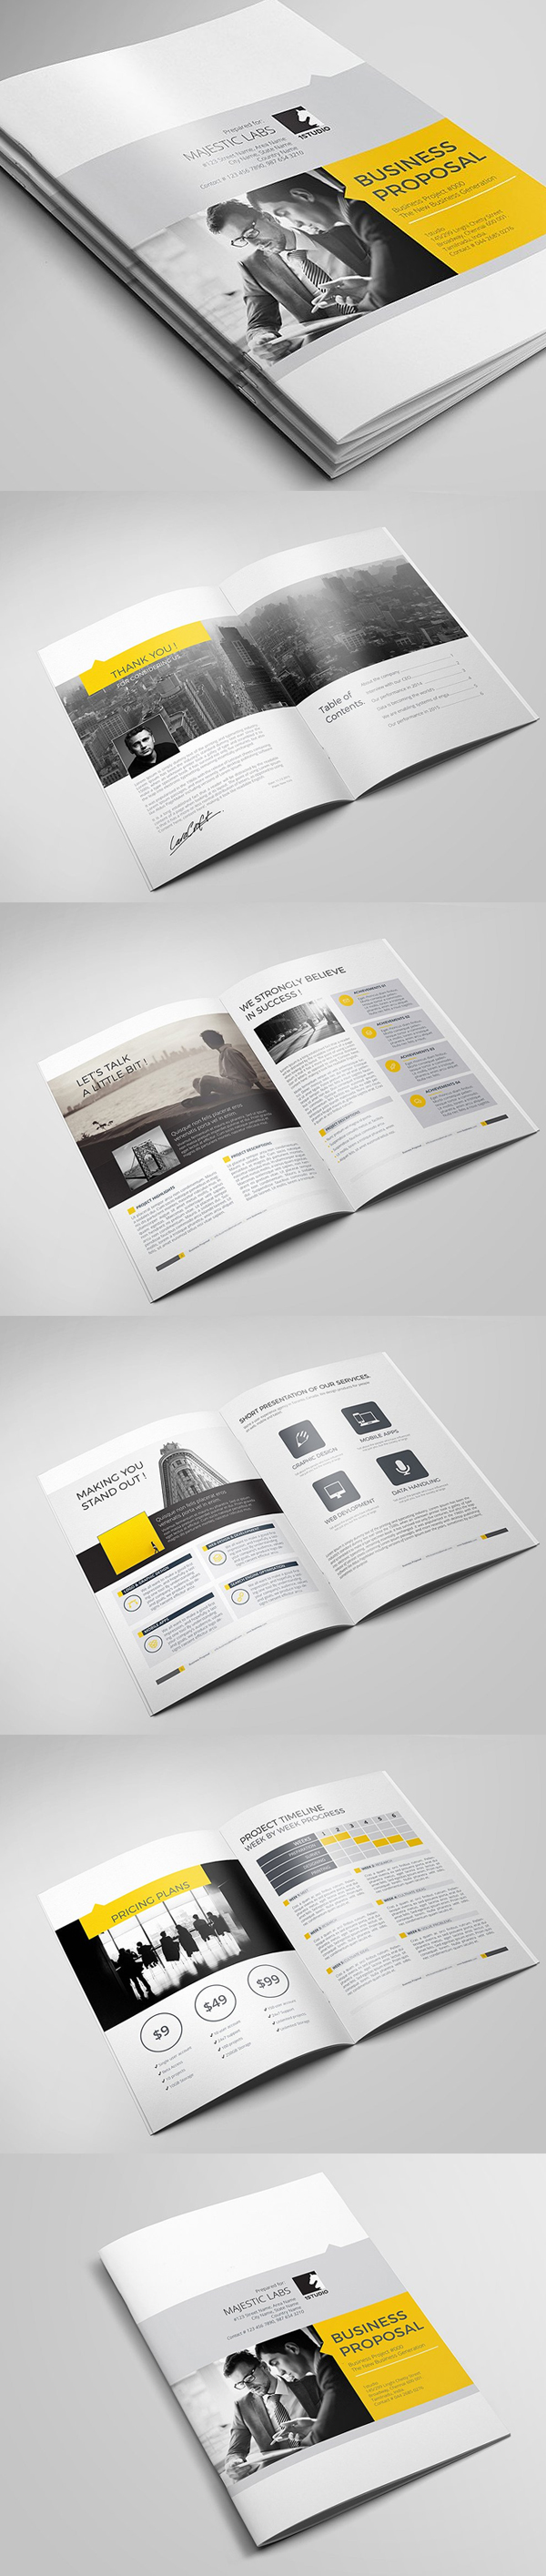 100 Professional Corporate Brochure Templates - 20